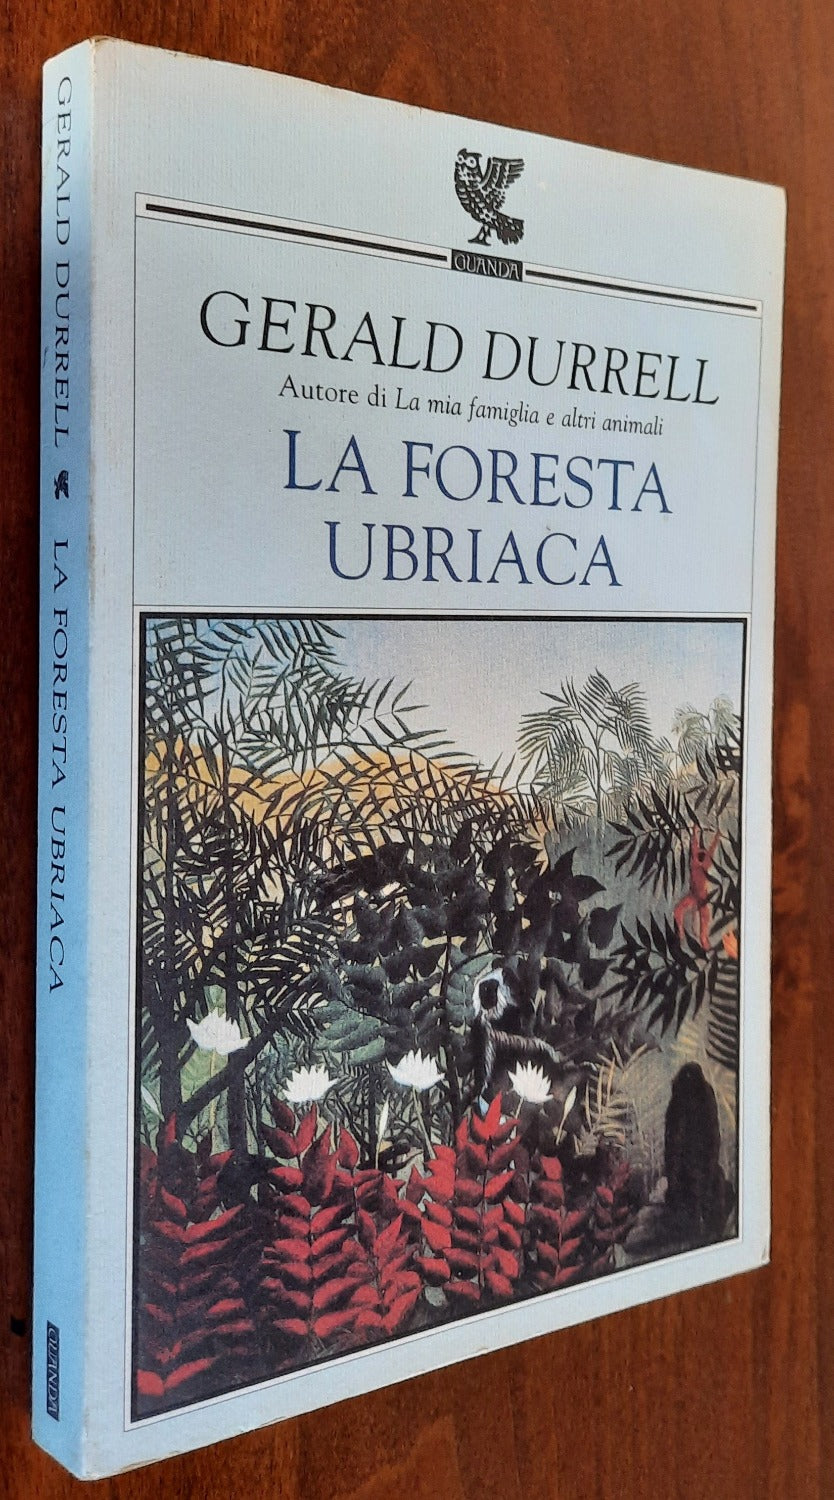 La foresta ubriaca - Guanda